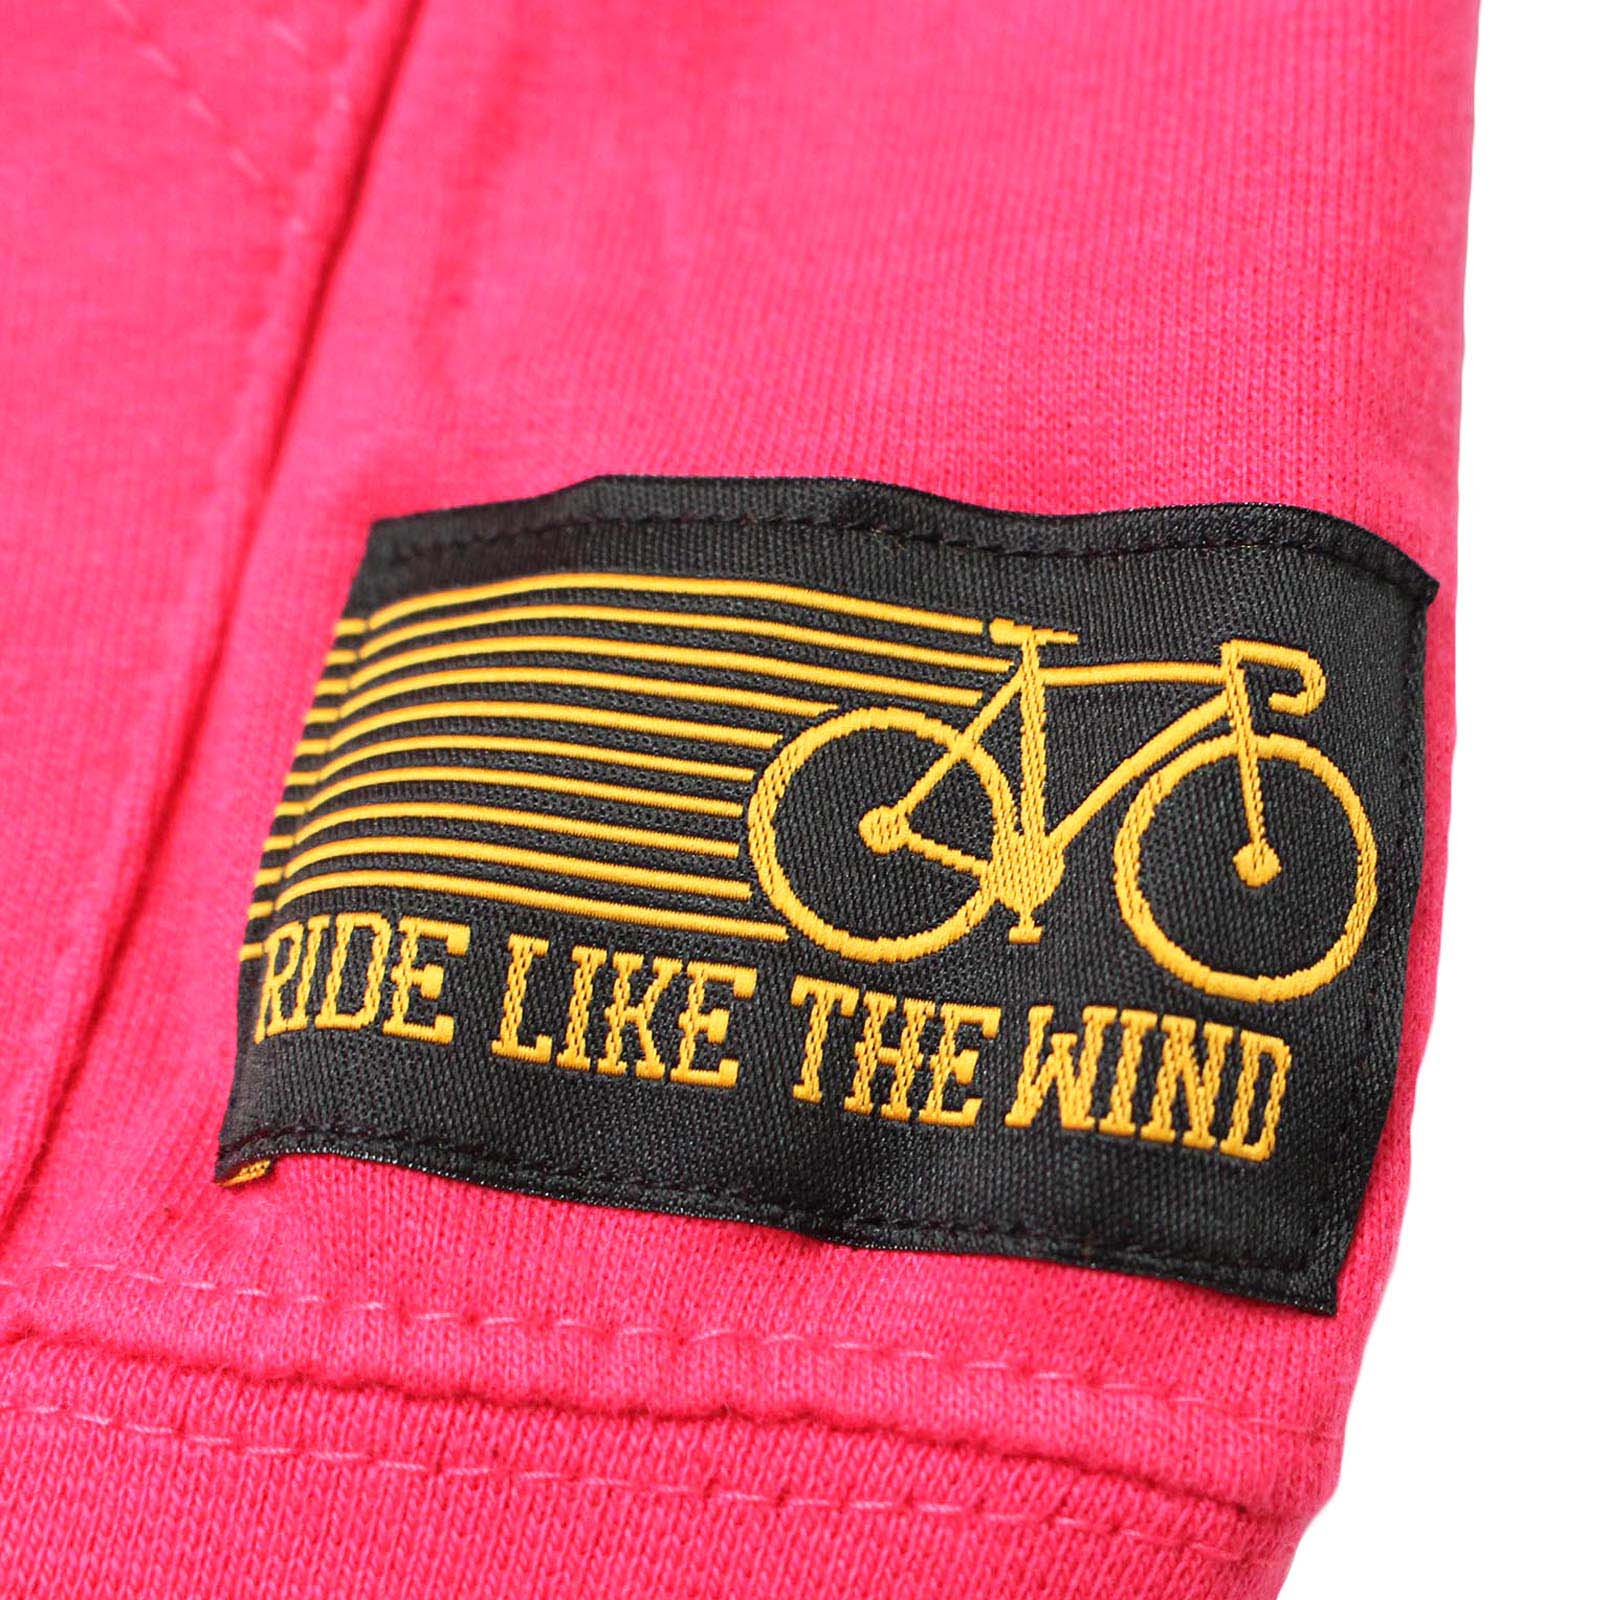 Cycling Hoodie Bmx Pulse hoody top bicycle cycle funny Birthday HOODY